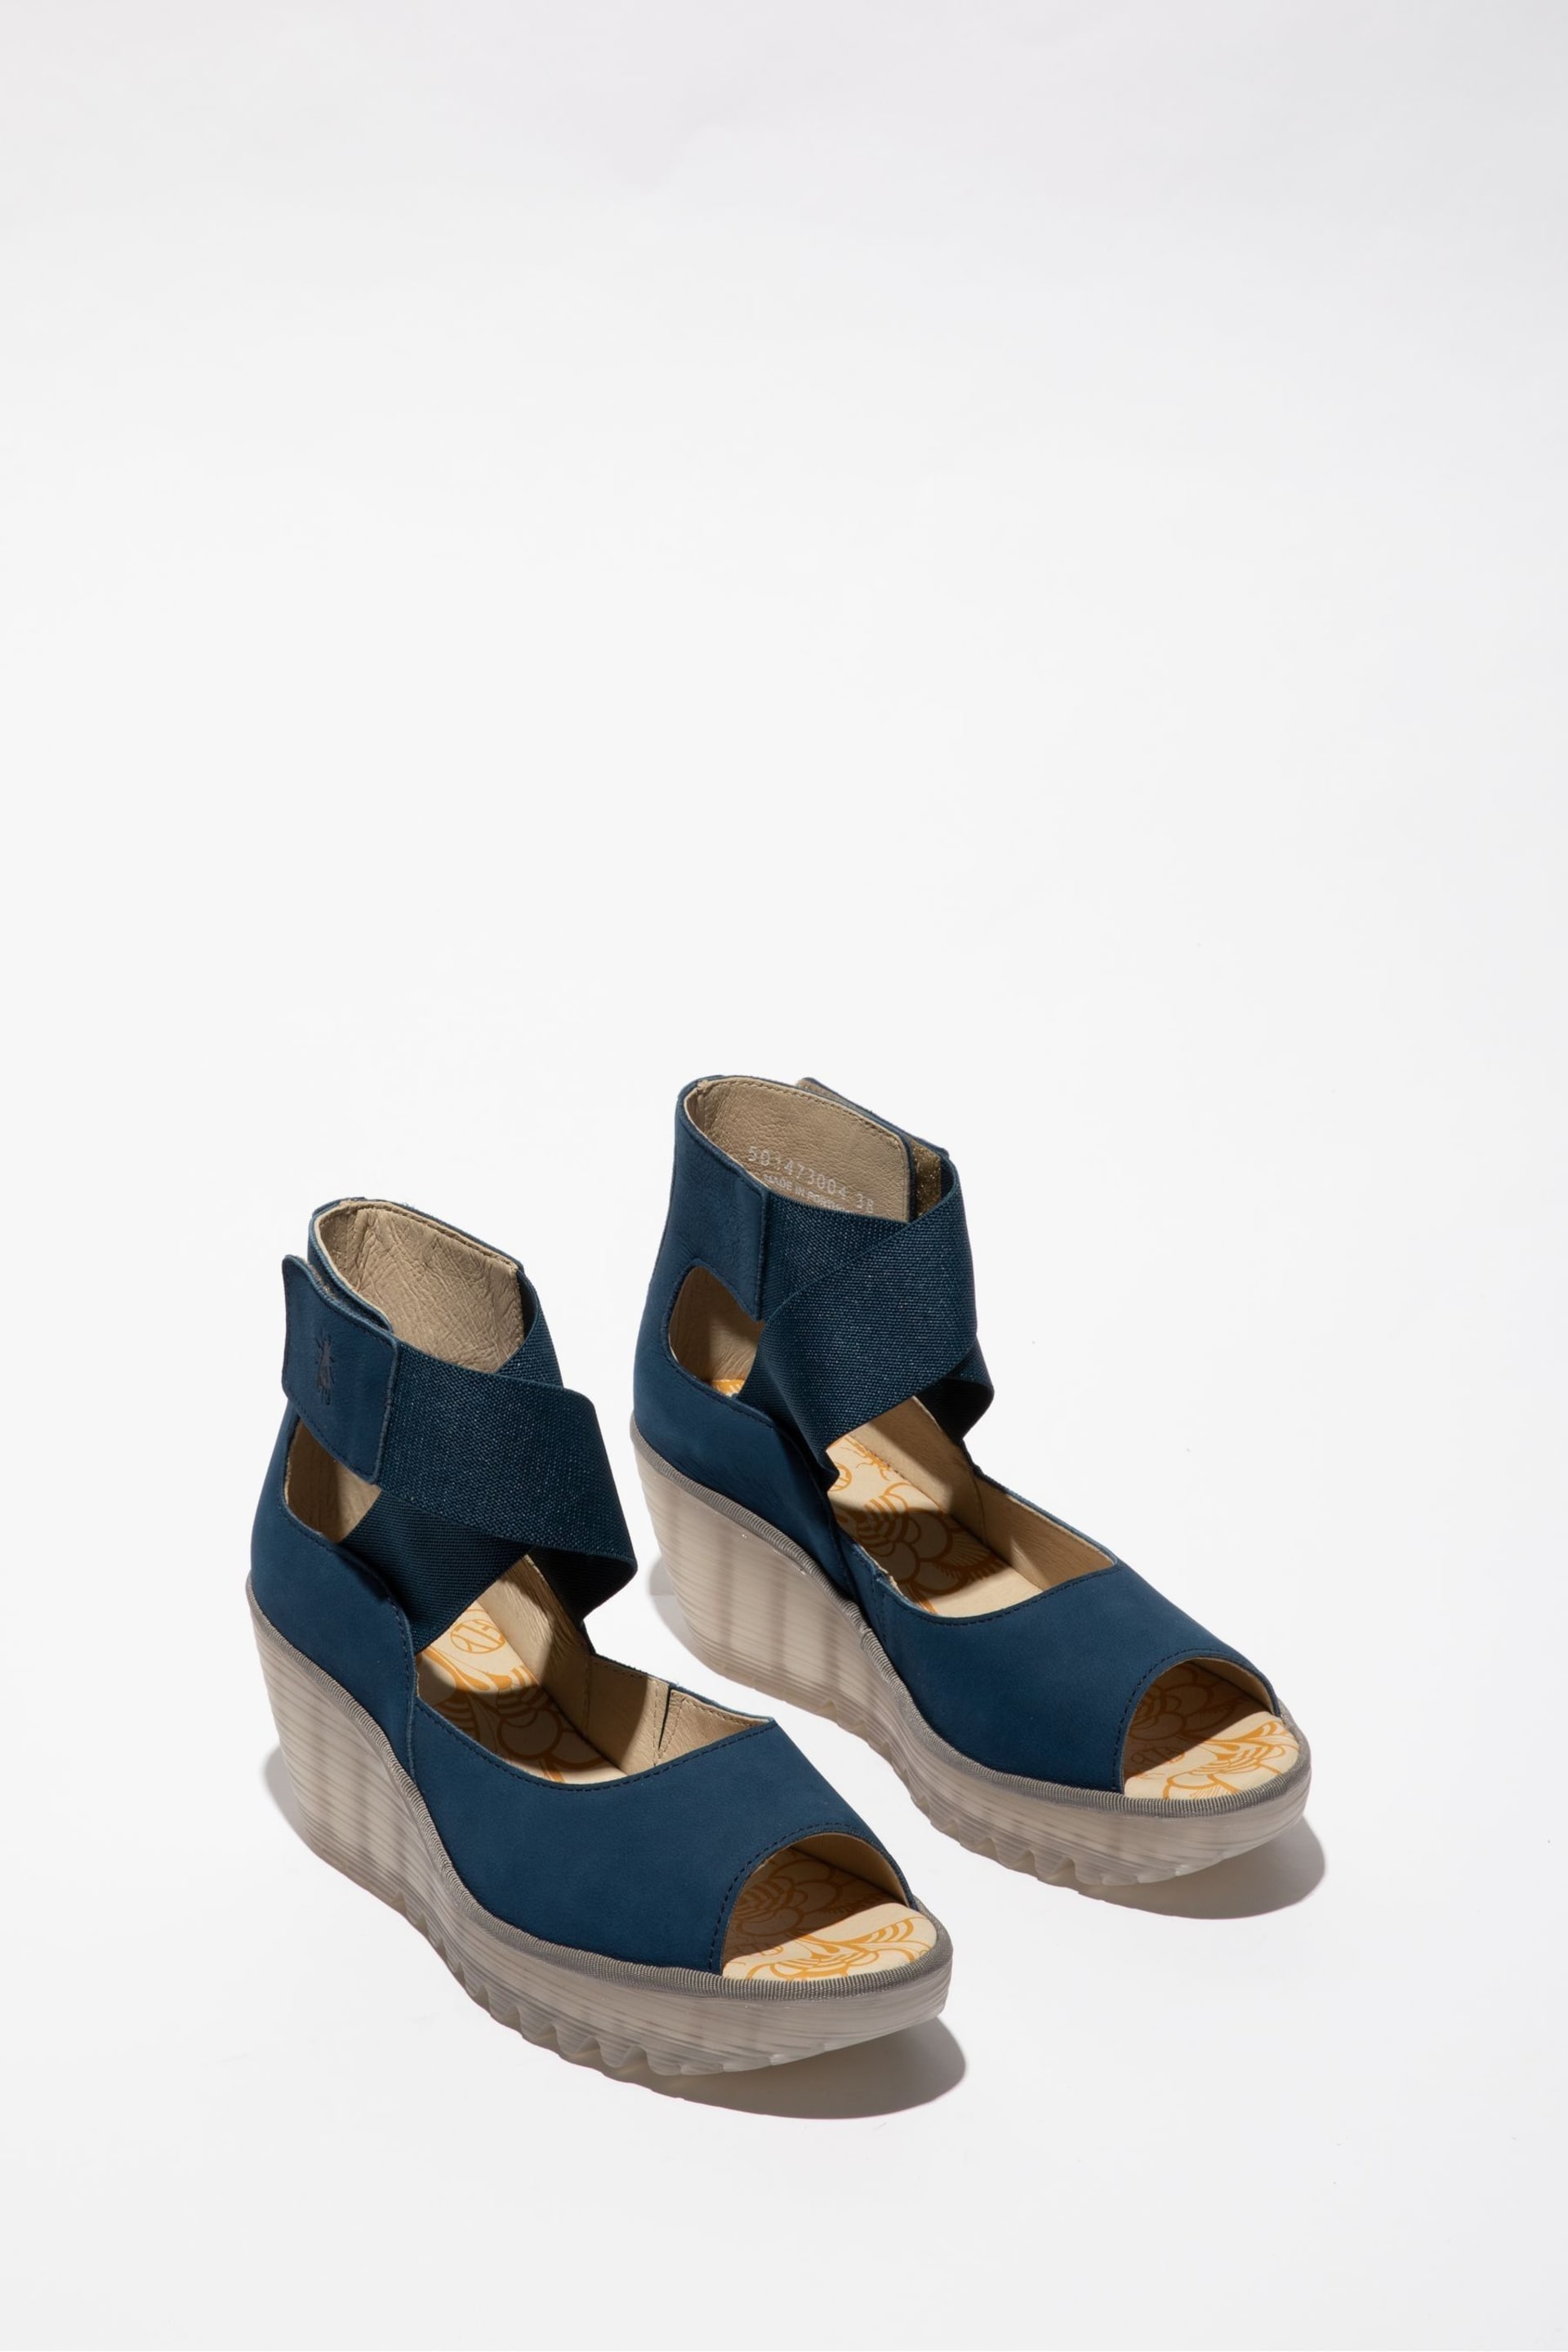 Fly Lonfon Blue Yefi Sandals - Image 3 of 4